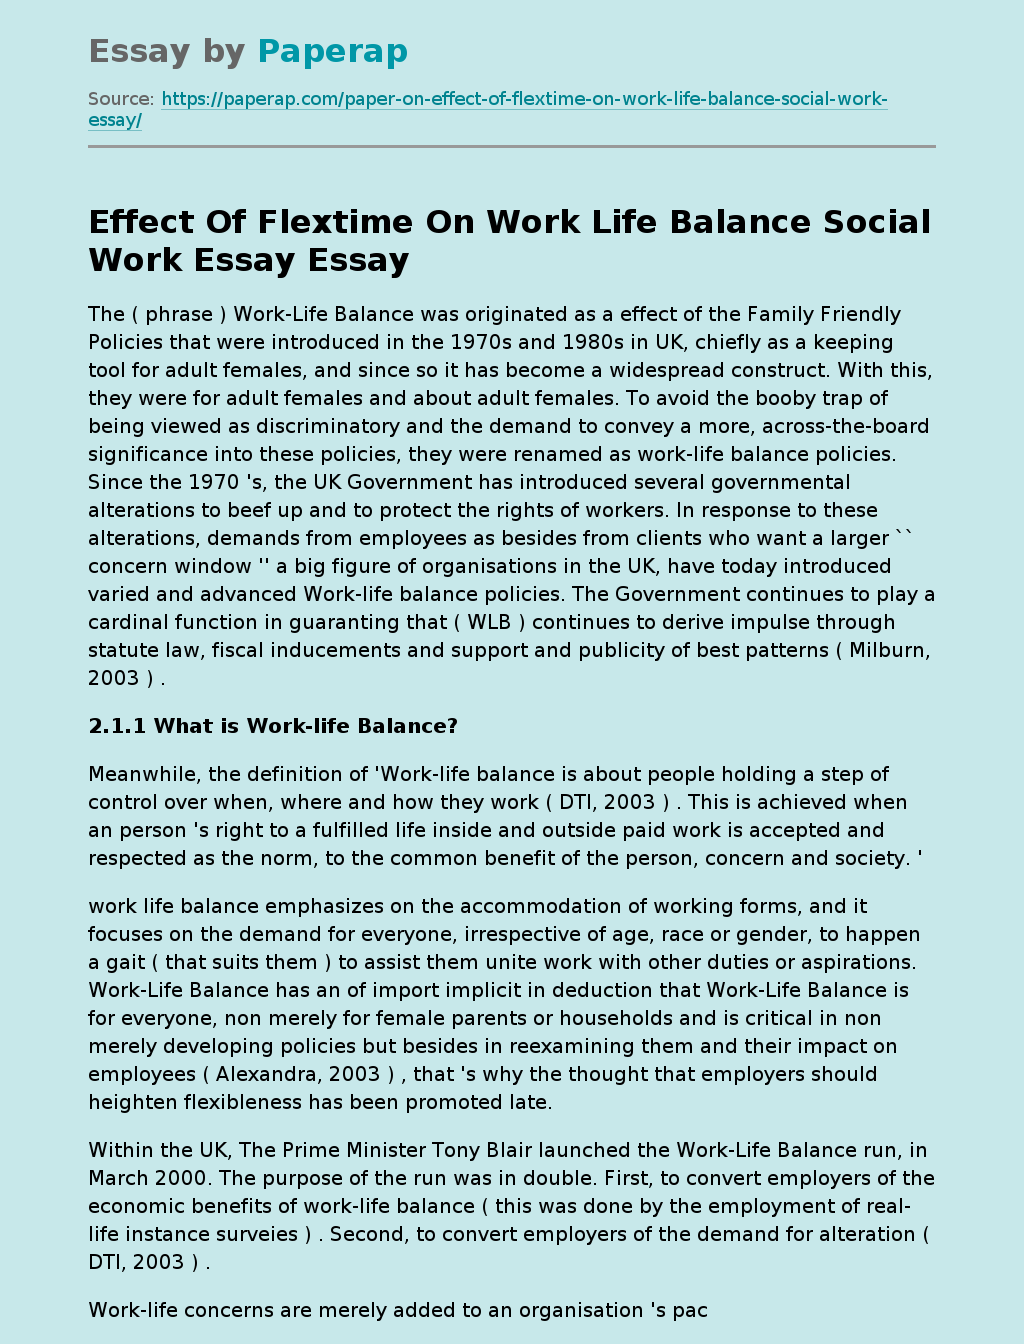 Effect Of Flextime On Work Life Balance Social Work Essay